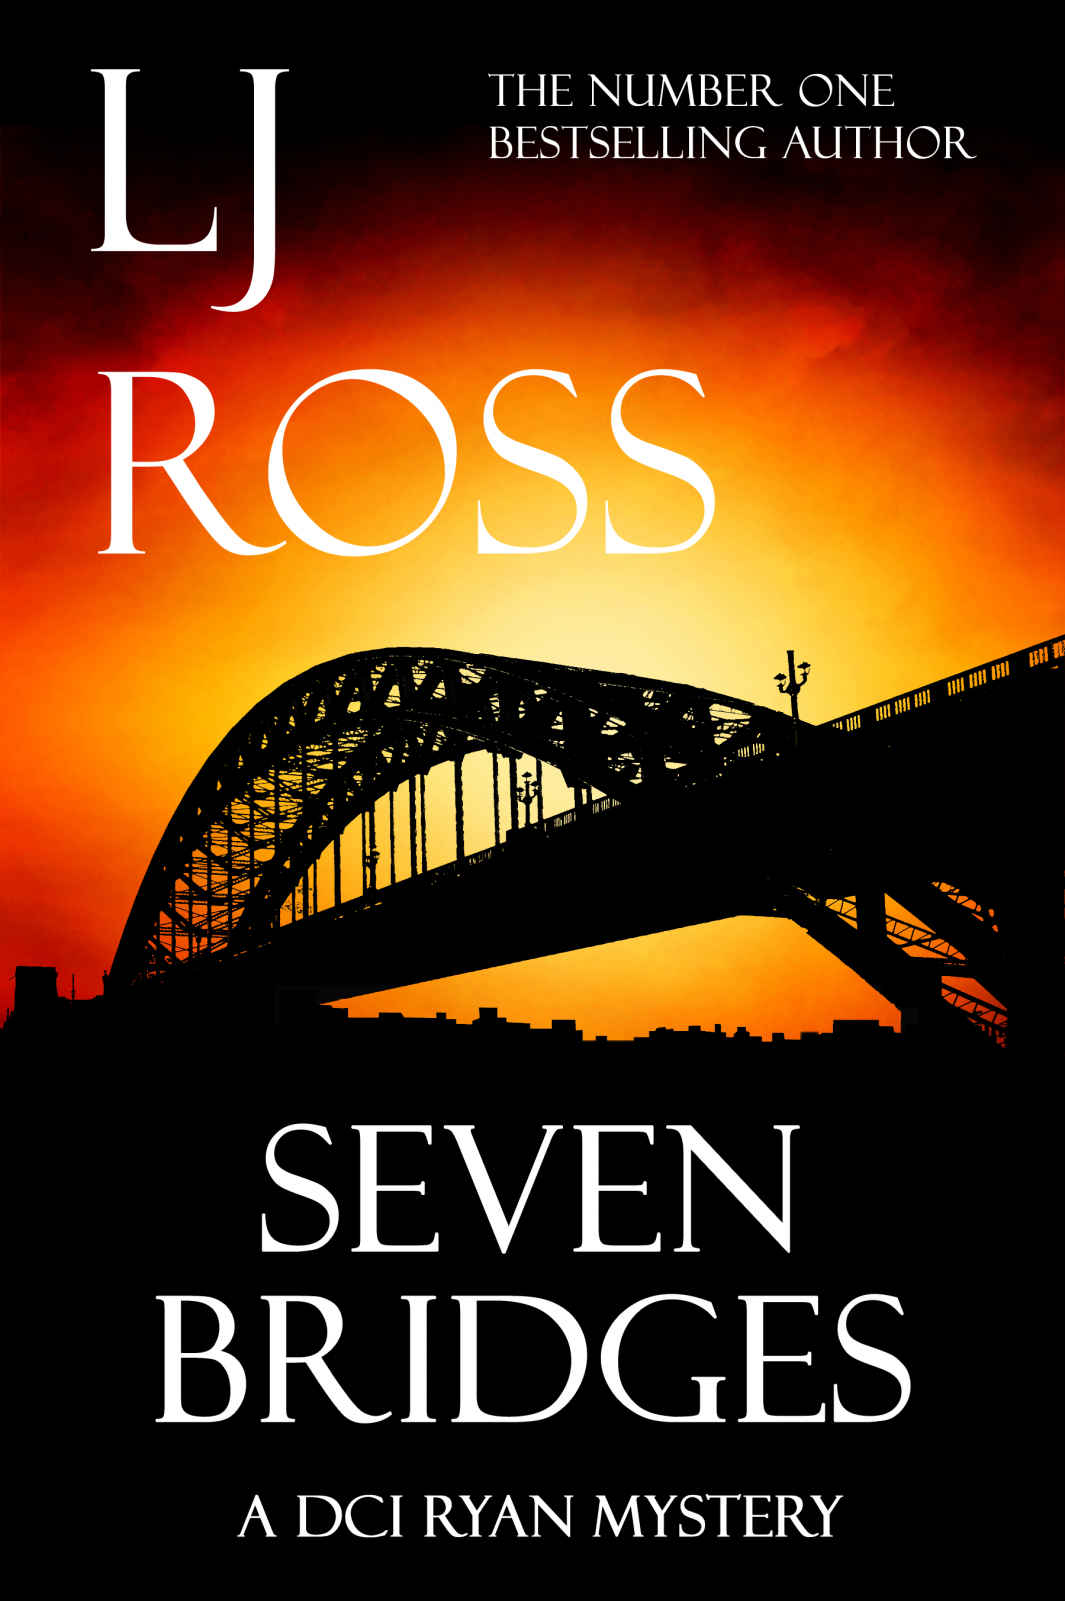 Seven Bridges | LJ Ross